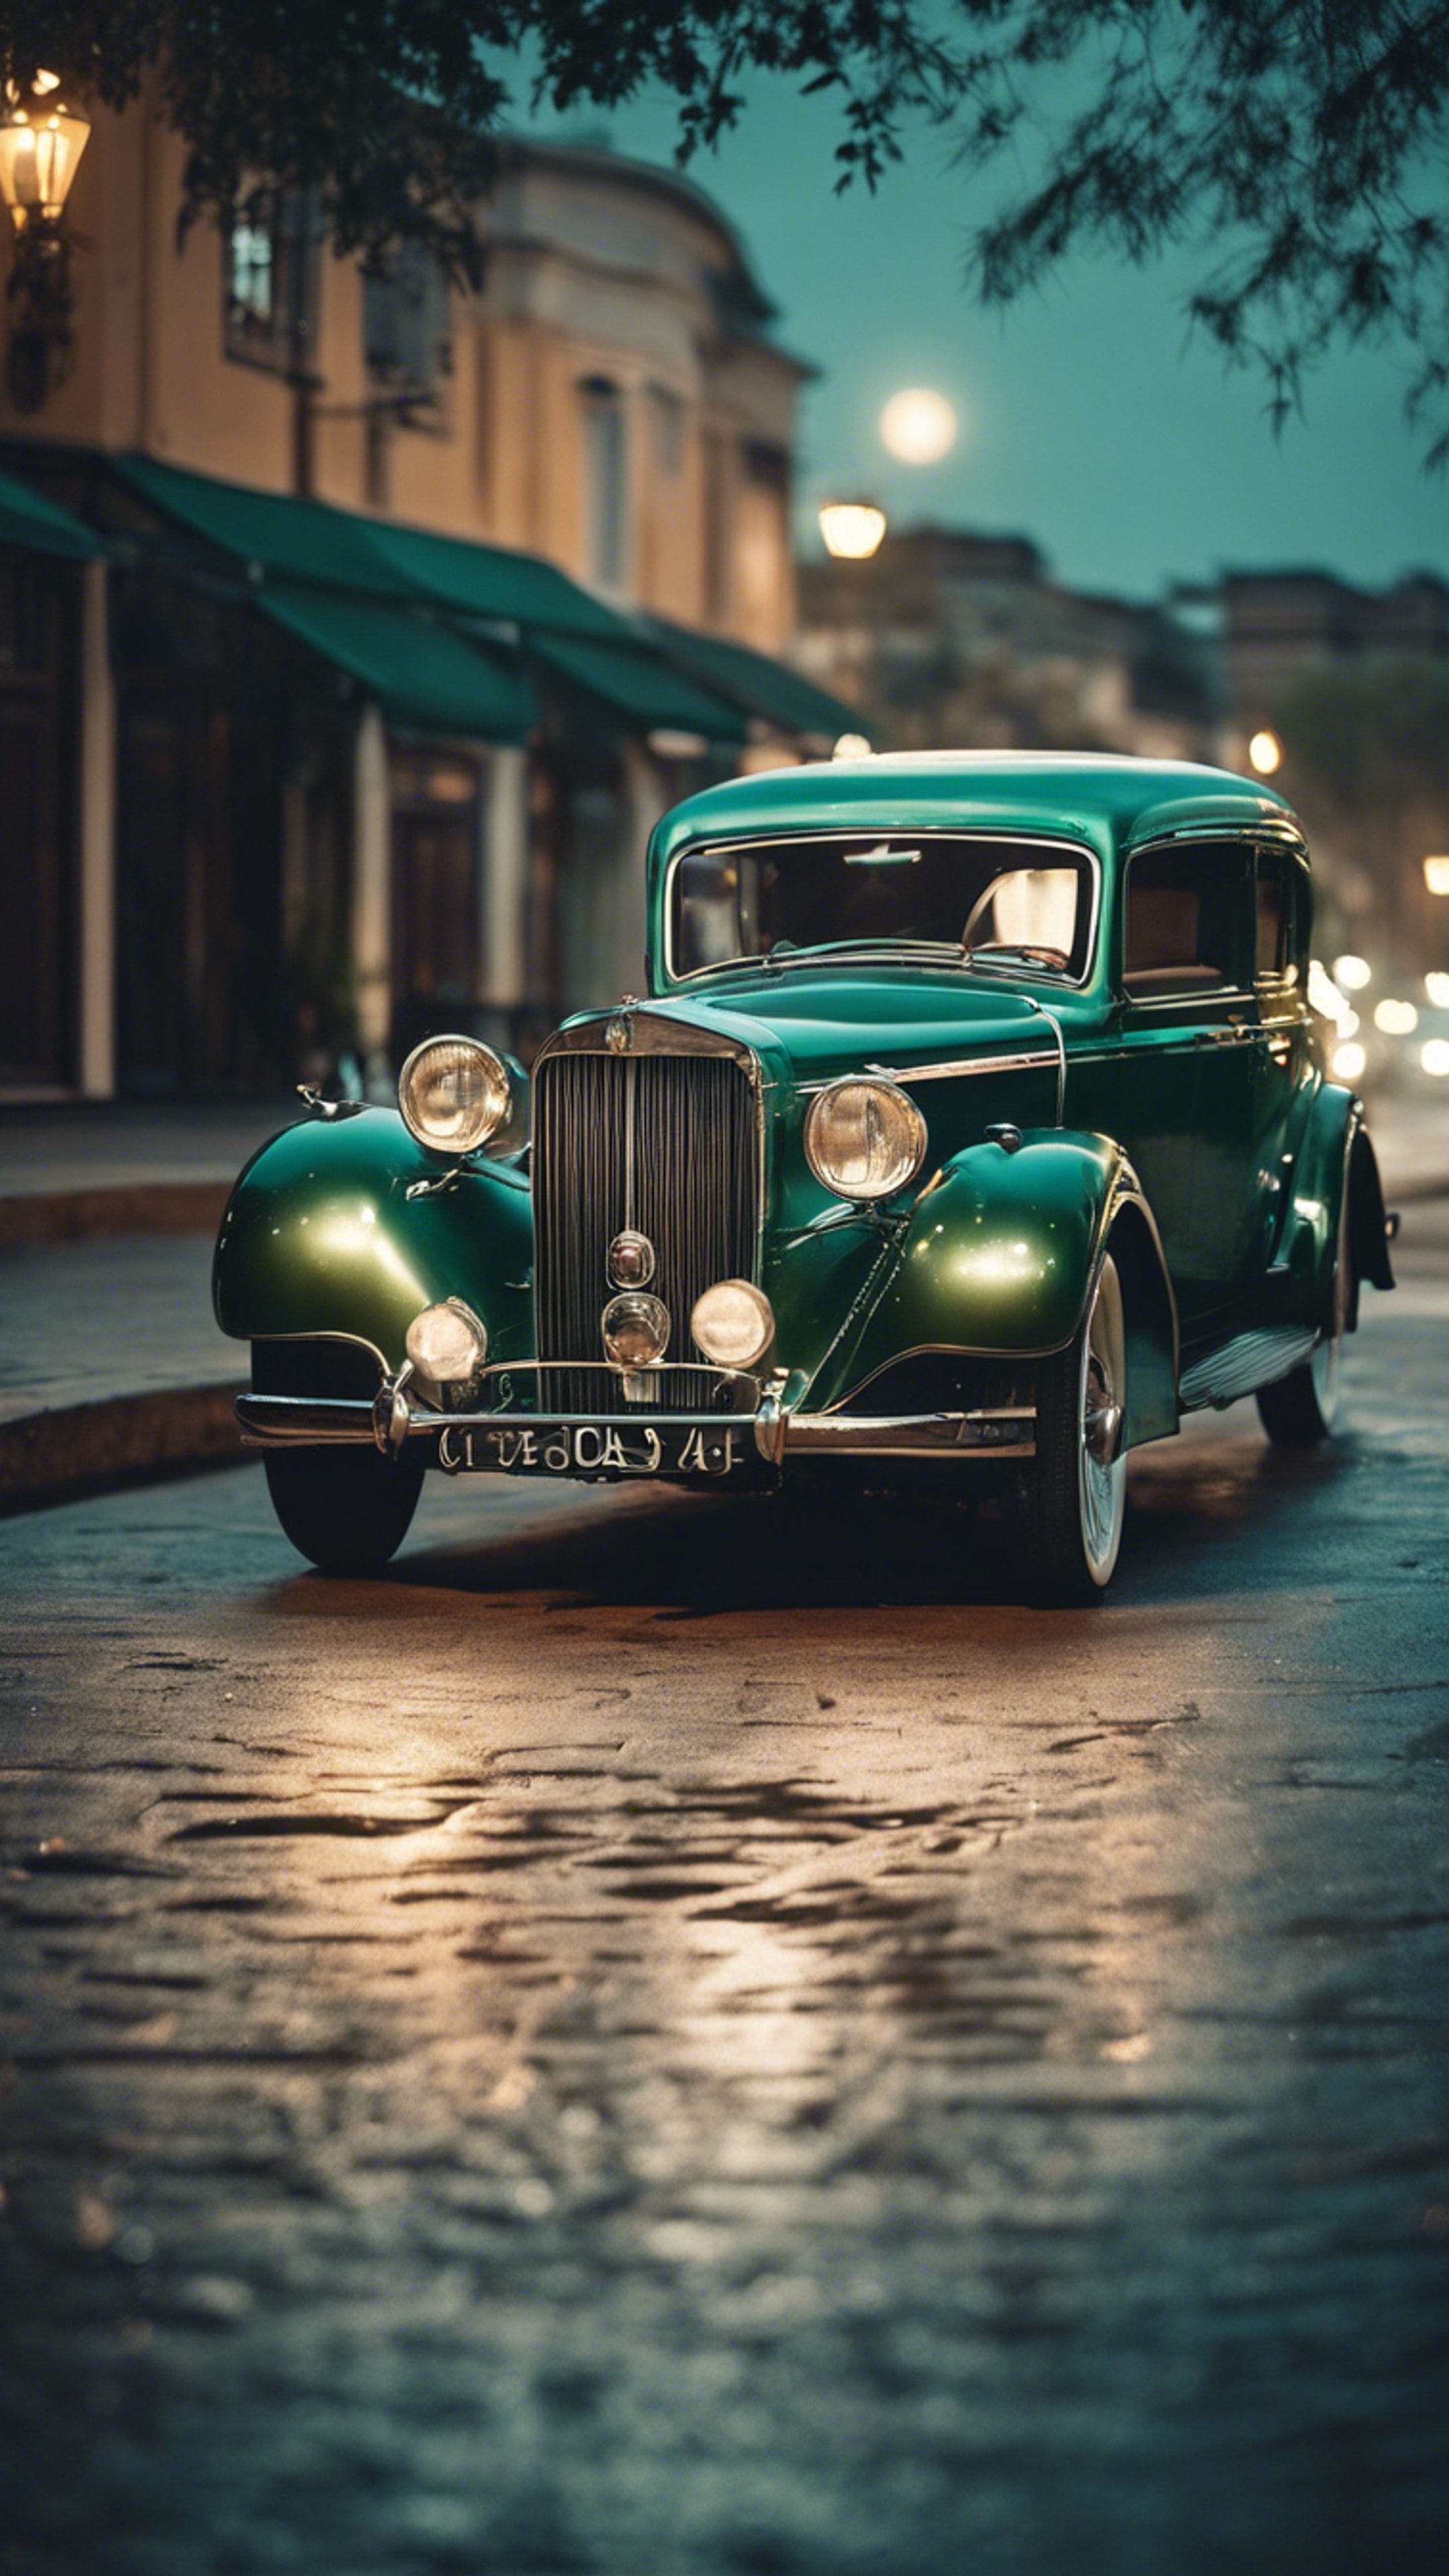 A luxurious antique car painted in cool dark green under the moonlight. Tapéta[5cdba2e68b66456f8c5a]